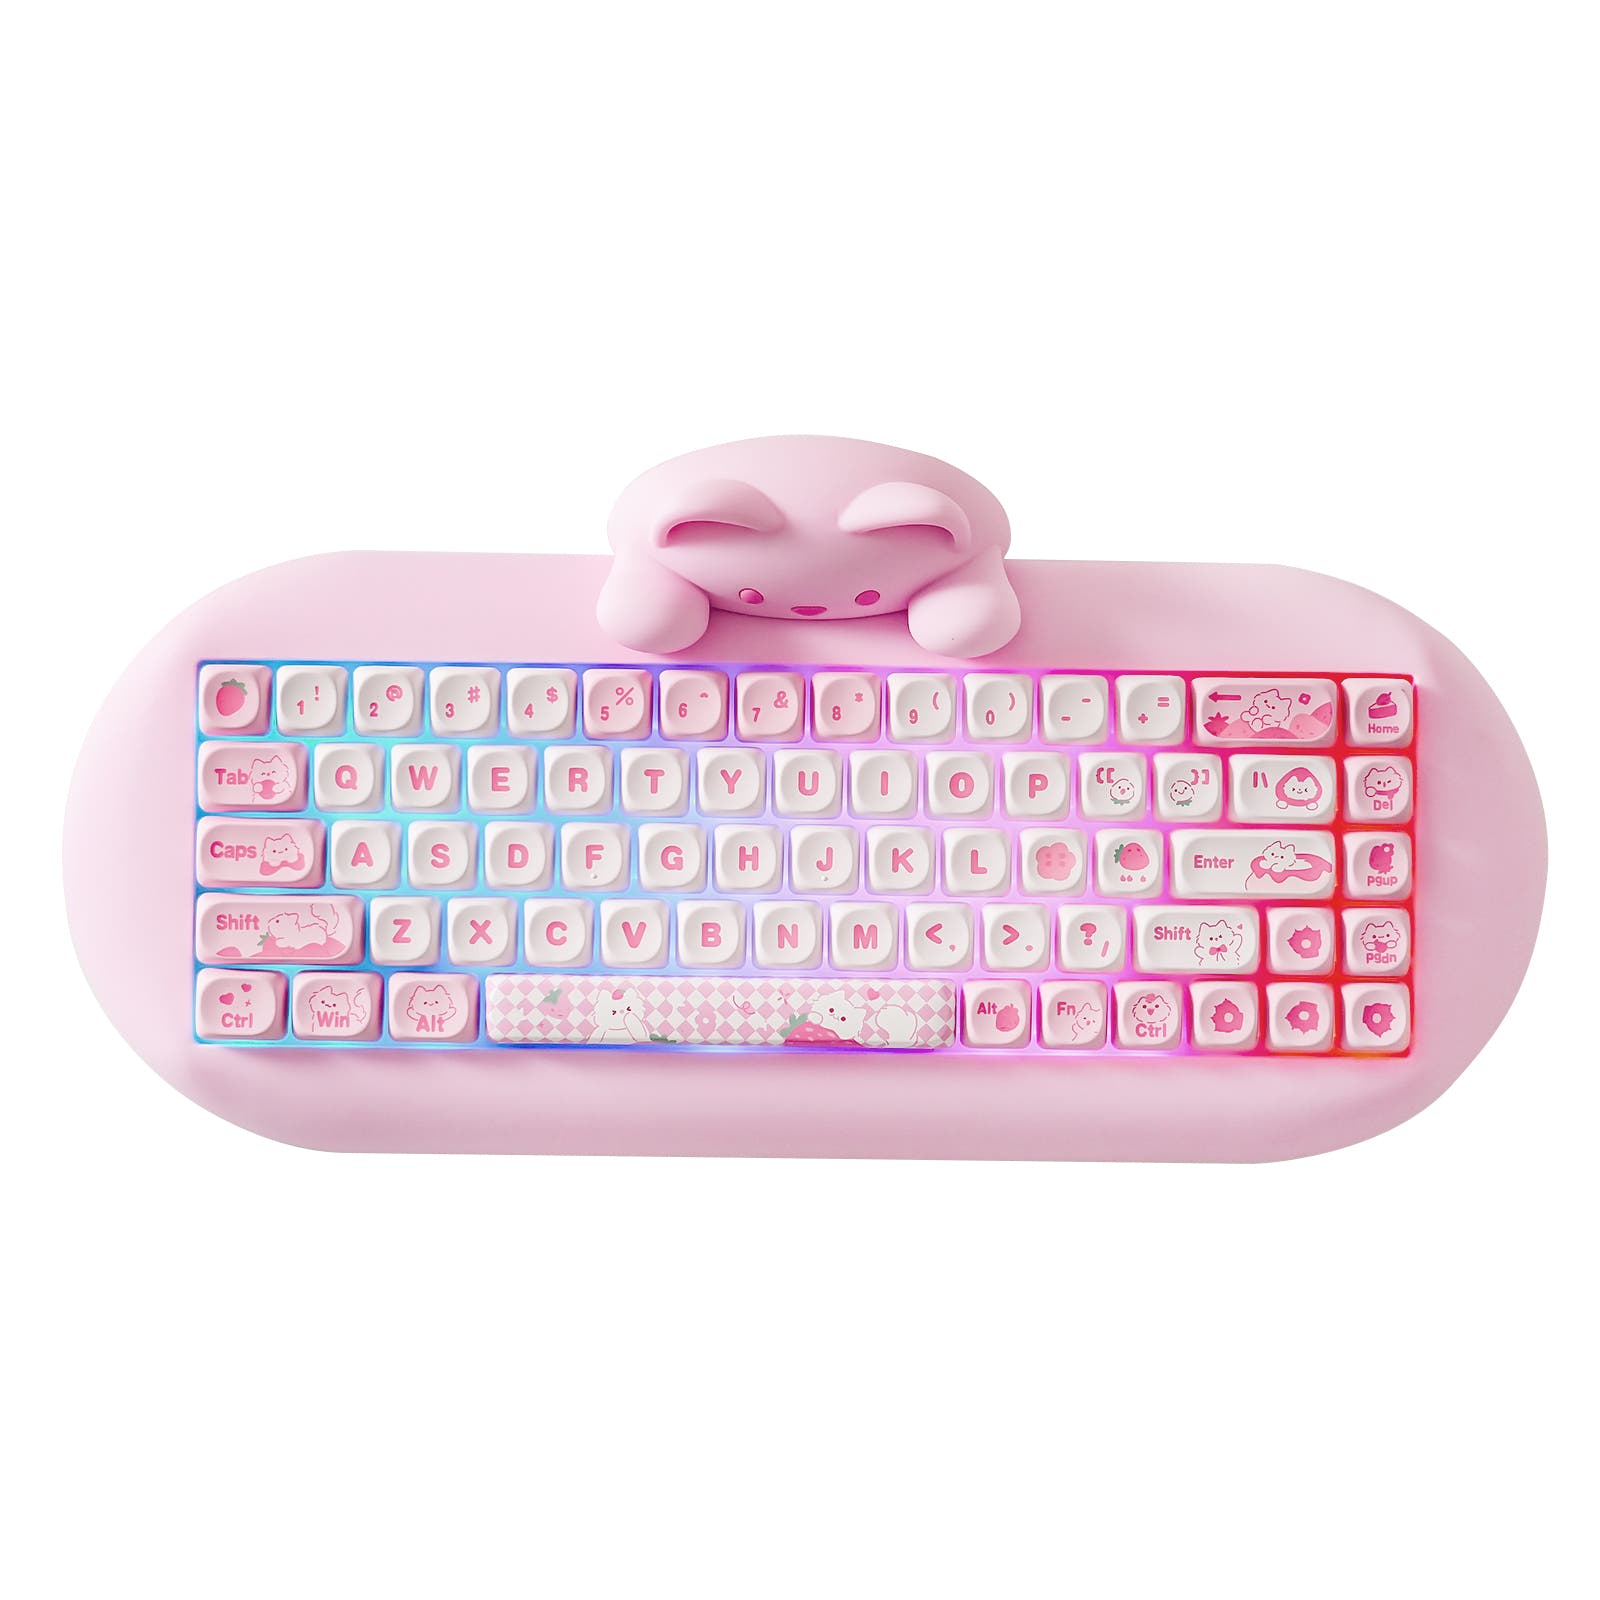 YUNZII C68 Hi-Fi Mechanical Keyboard Pink / Cocoa Cream-Early Bottoming